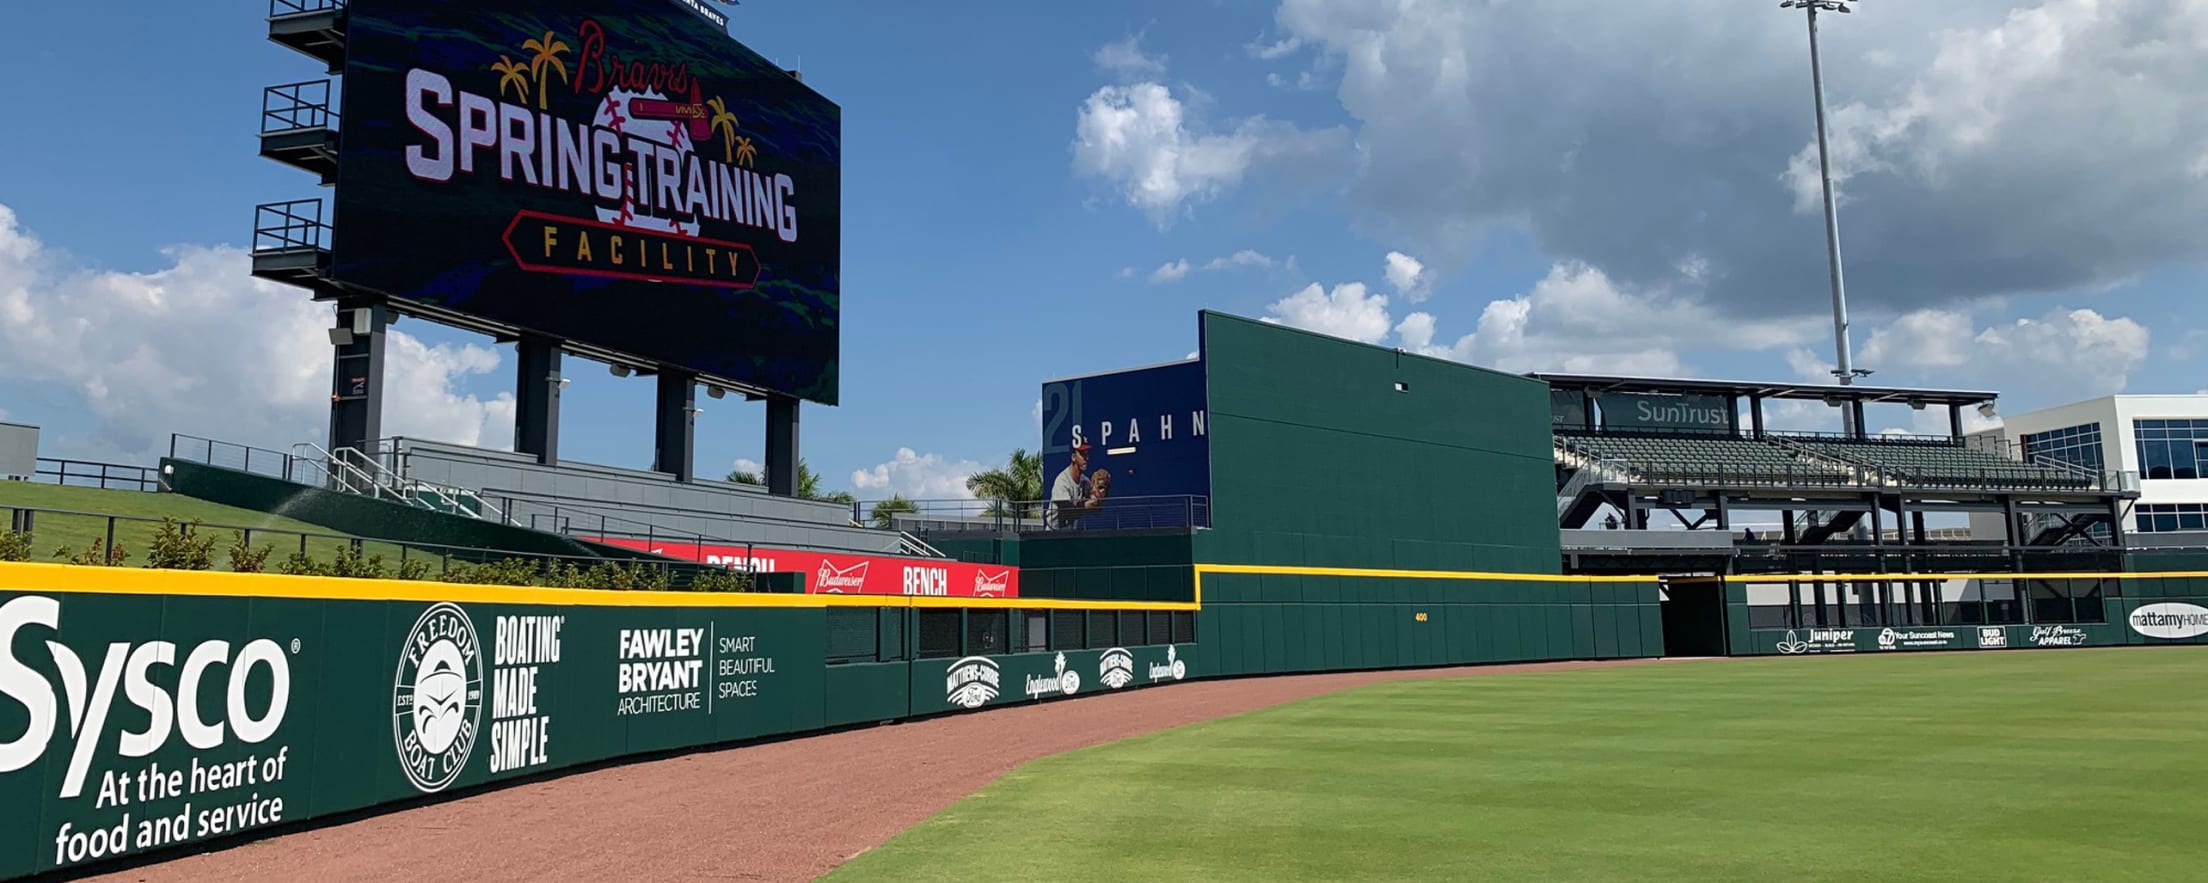 2020 Major League Baseball Spring Training Schedule features over 230 Games  Beginning February 21 - Enterprise Florida